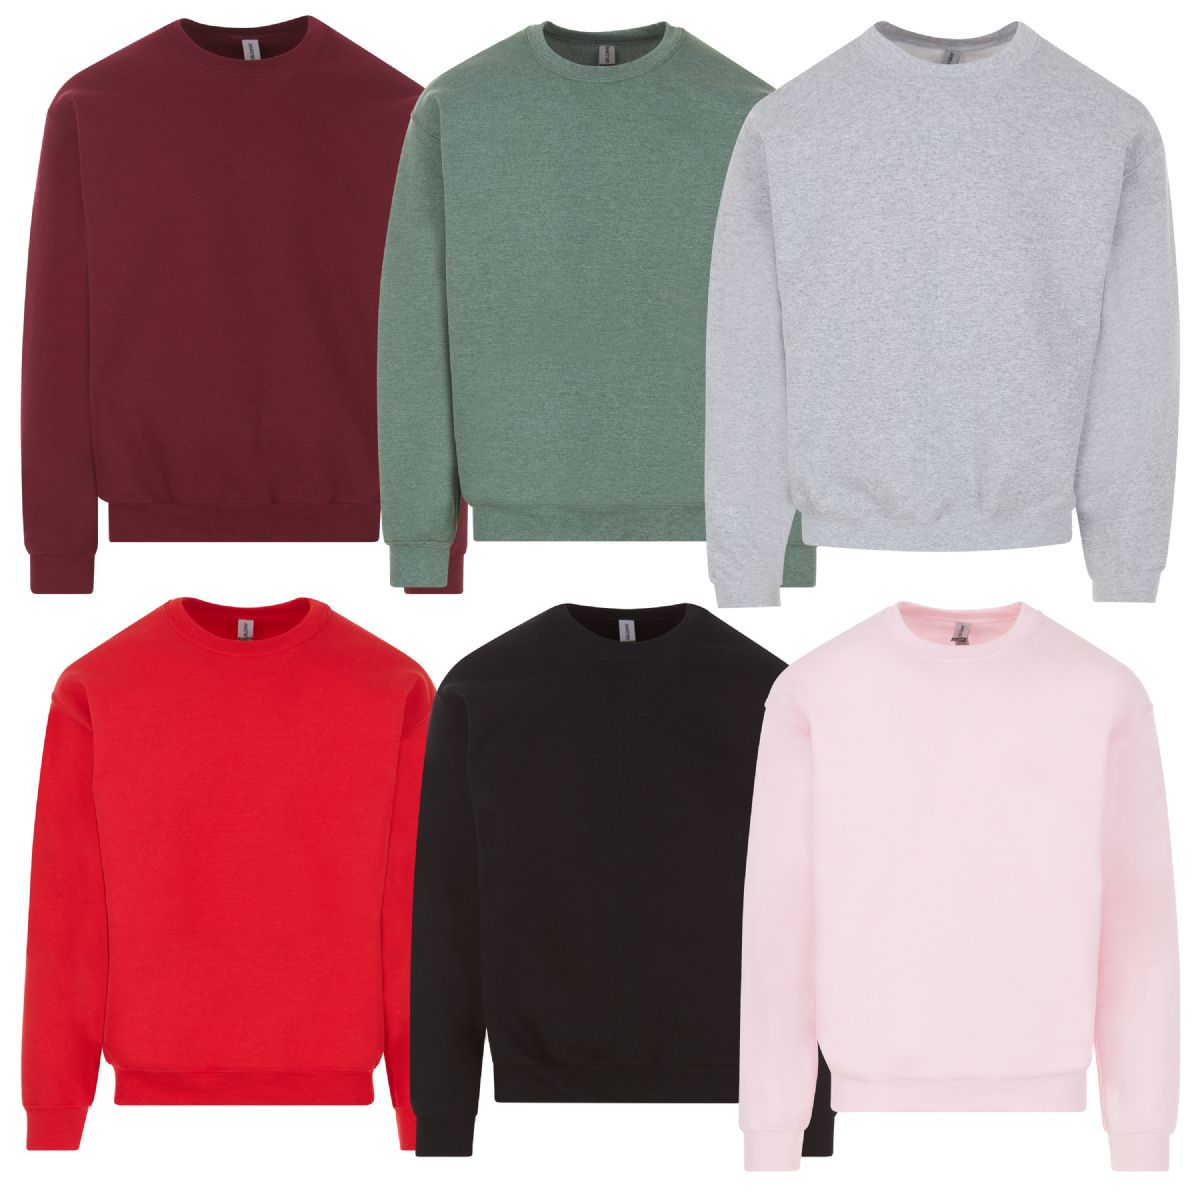 24 Bulk Gildan Unisex Assorted Colors Fleece Sweat Shirts Size 3xl